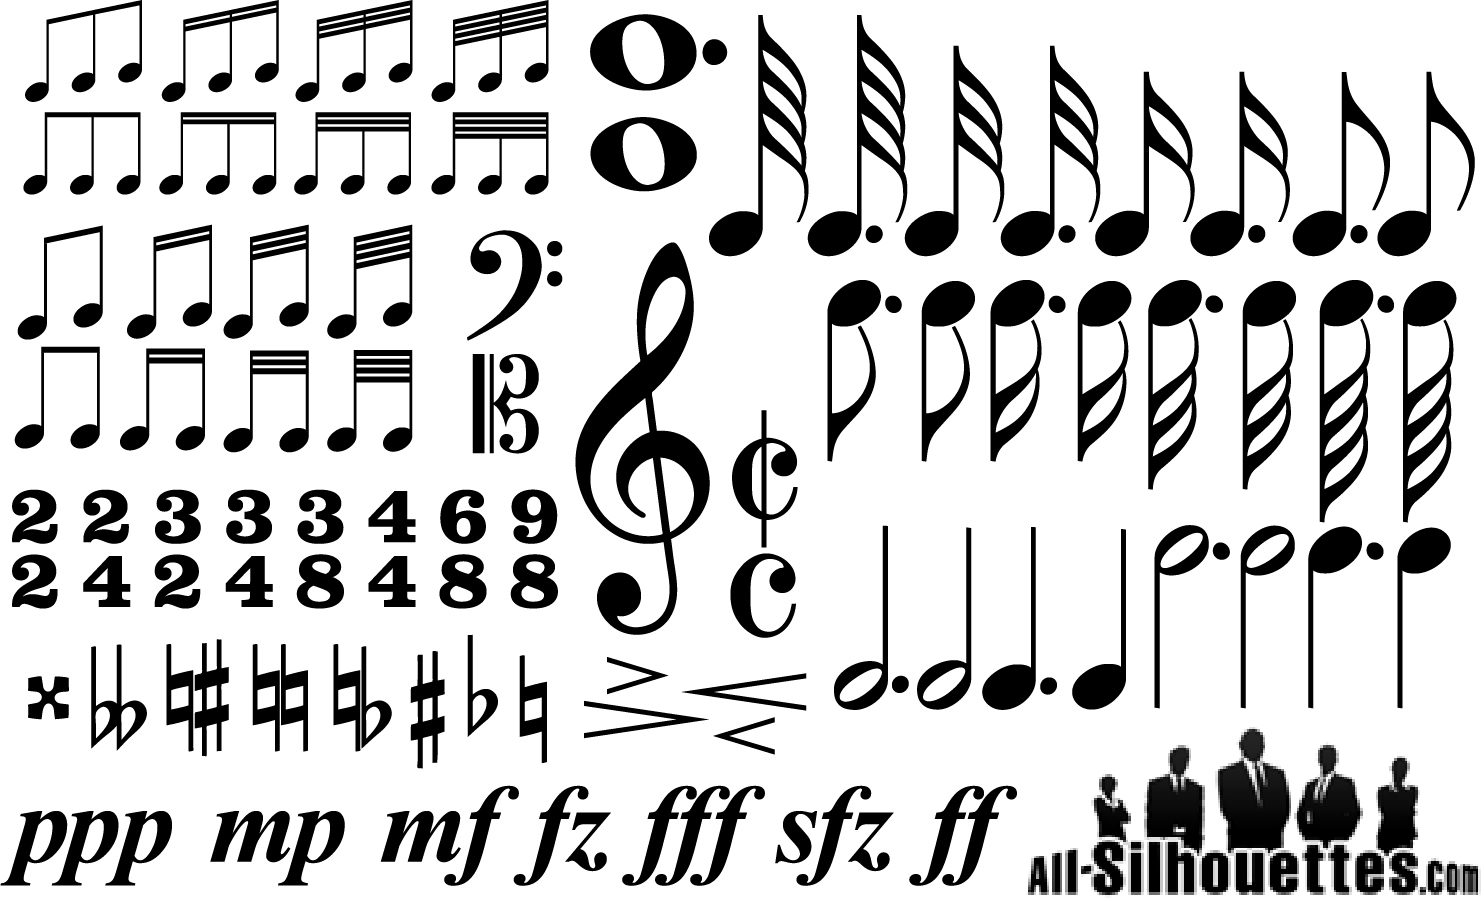 Bezierinfoベジェインフォ 音符と楽譜記号のクリップアート Music Notes And Time Signatures Symbols イラスト素材